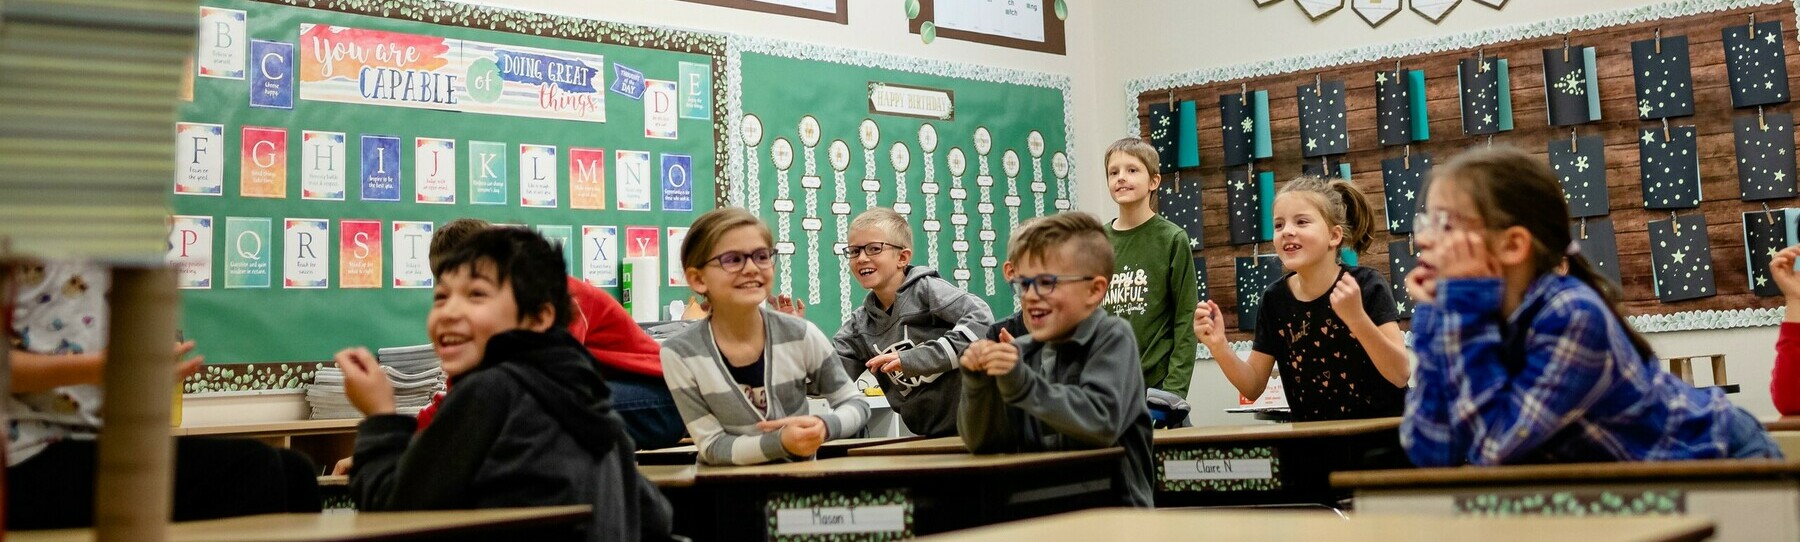 kids at desks in classroom